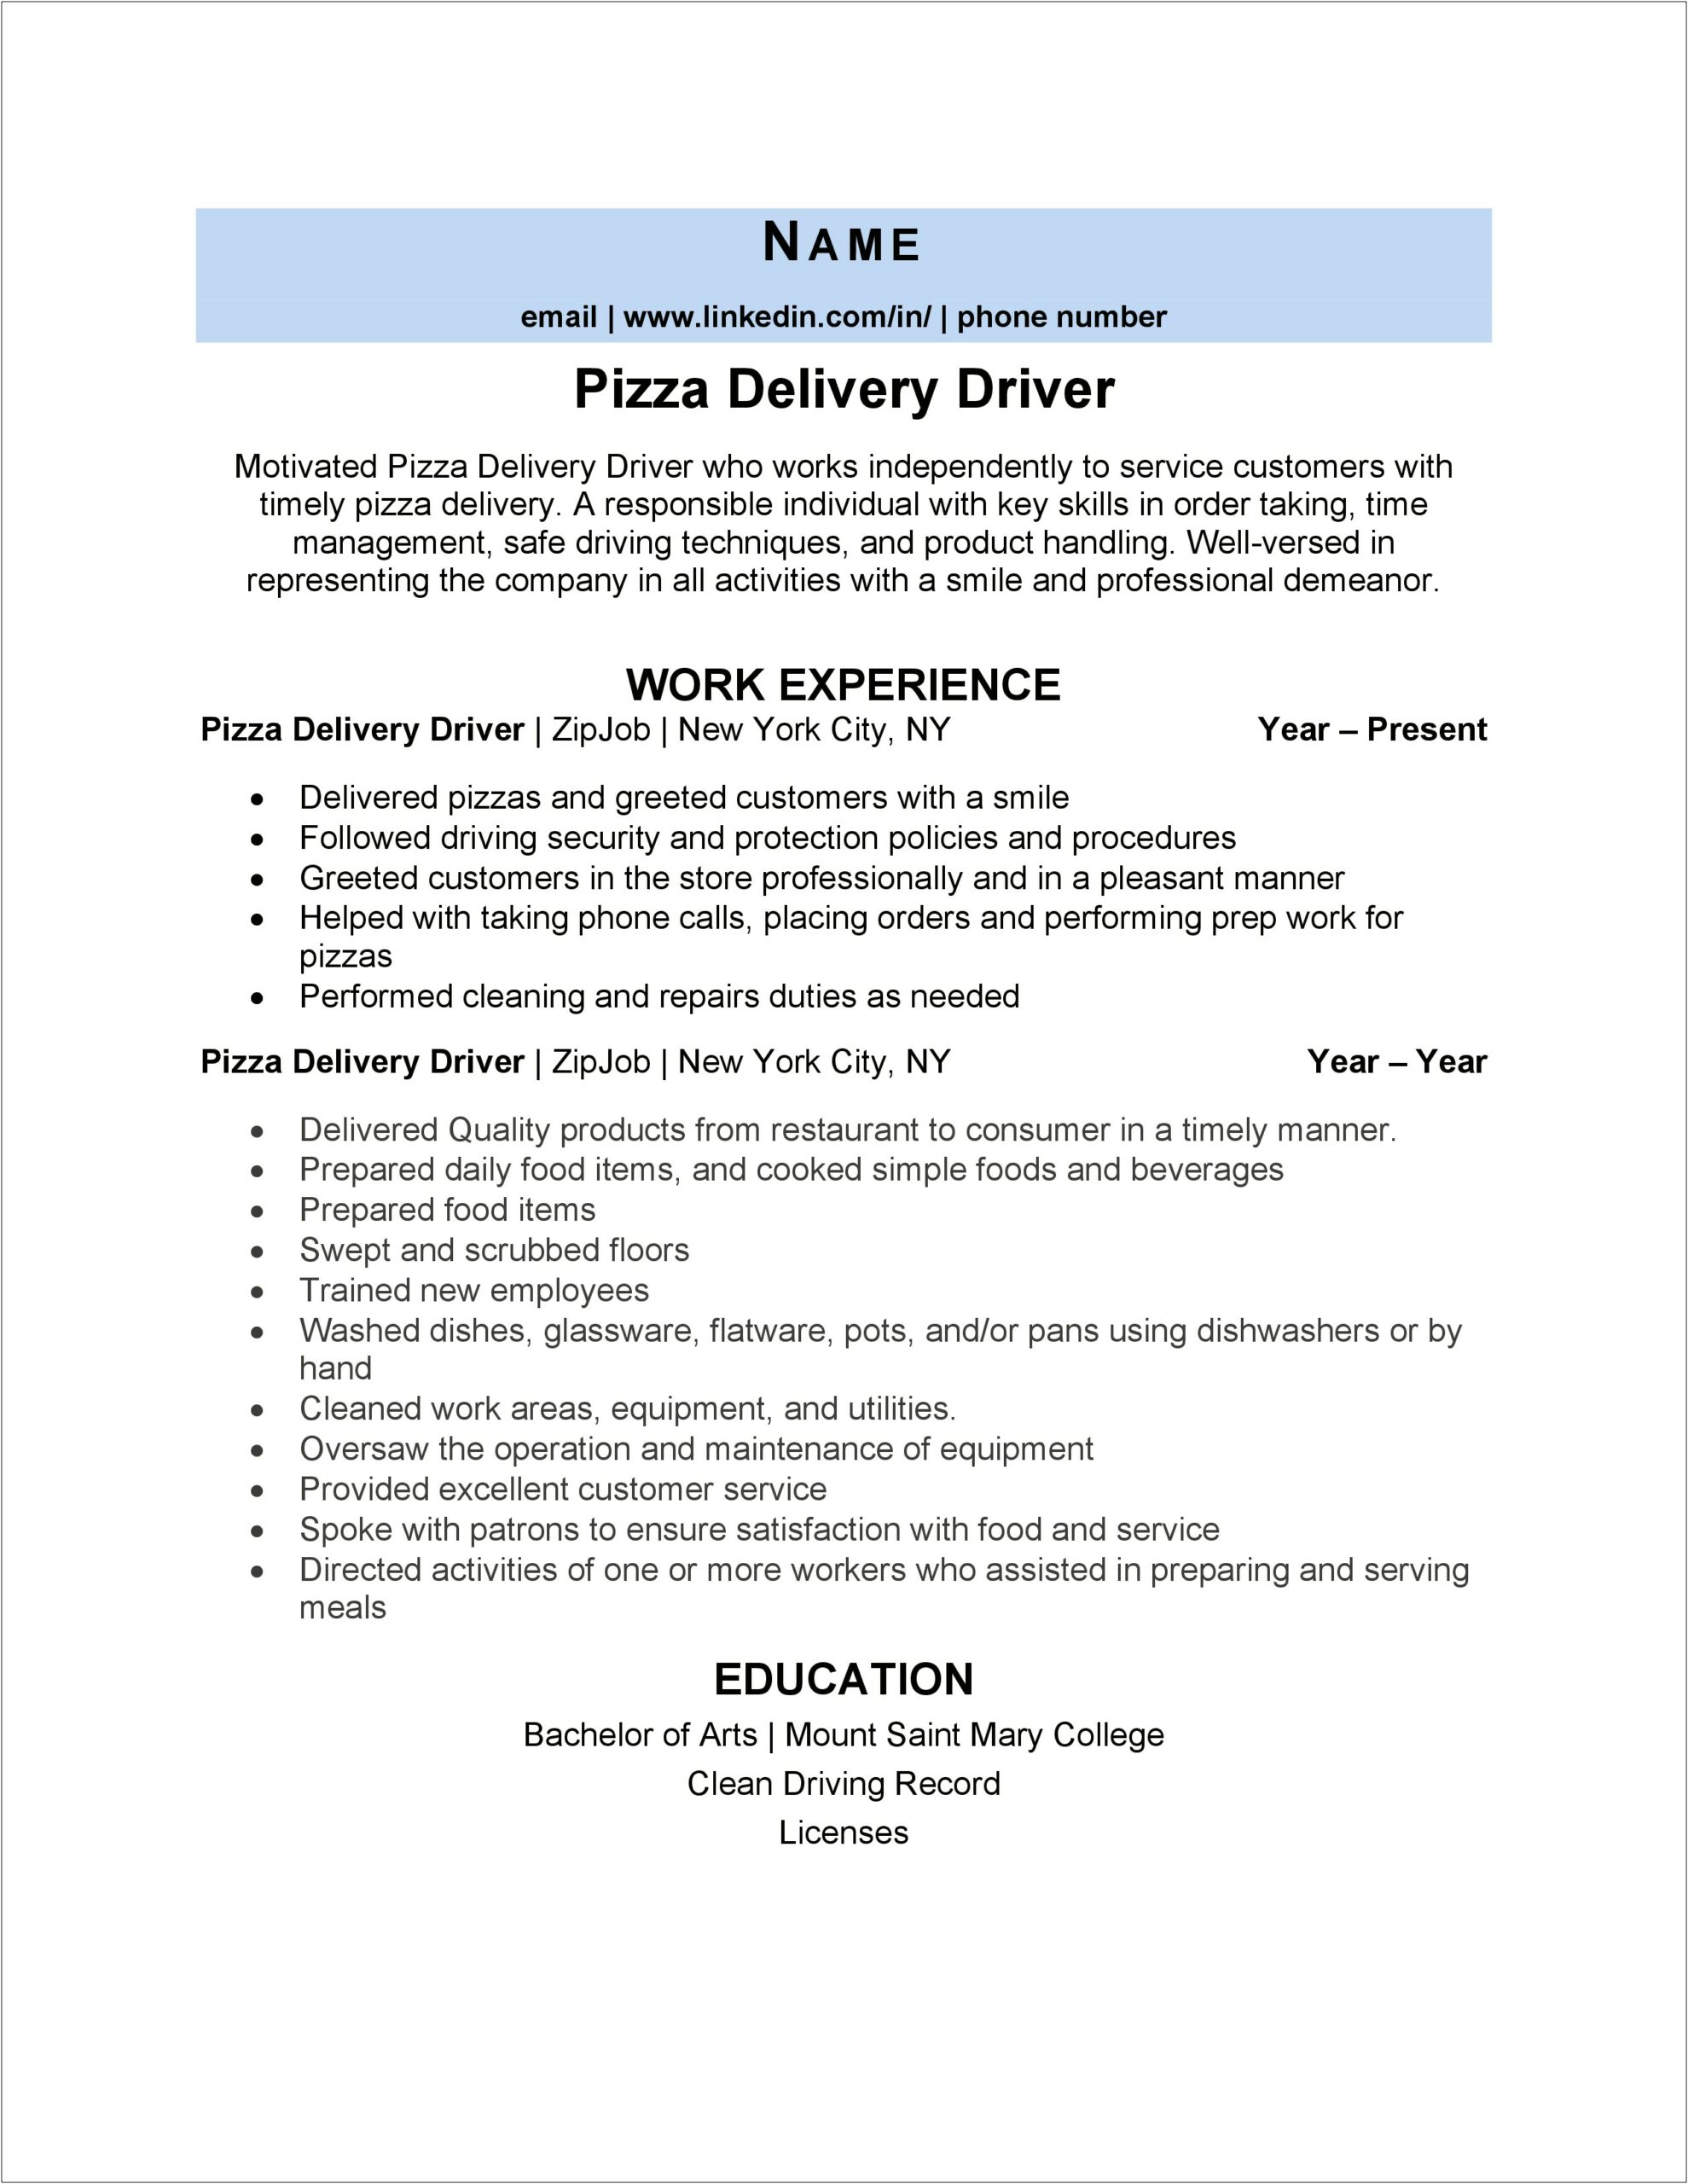 Pizza Maker Skills To Put On Resume